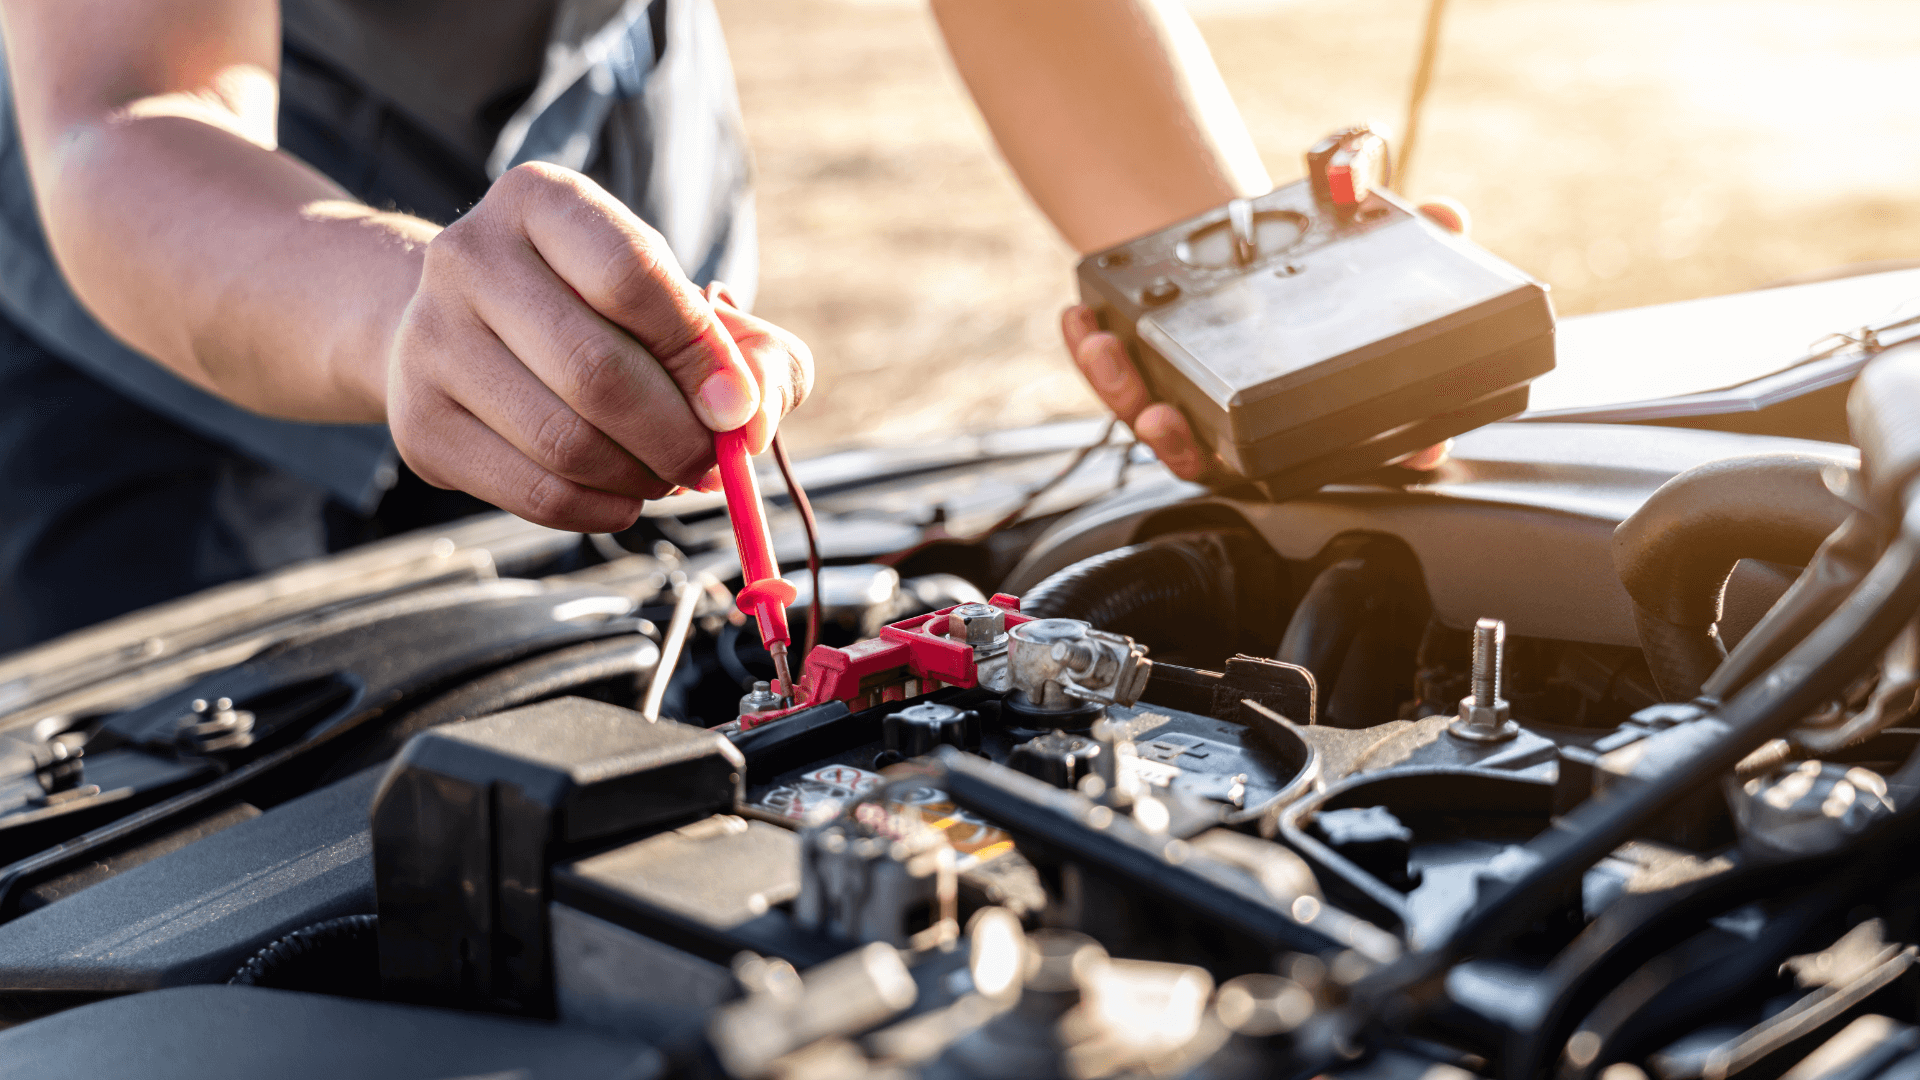 How Long Do Car Batteries Last?